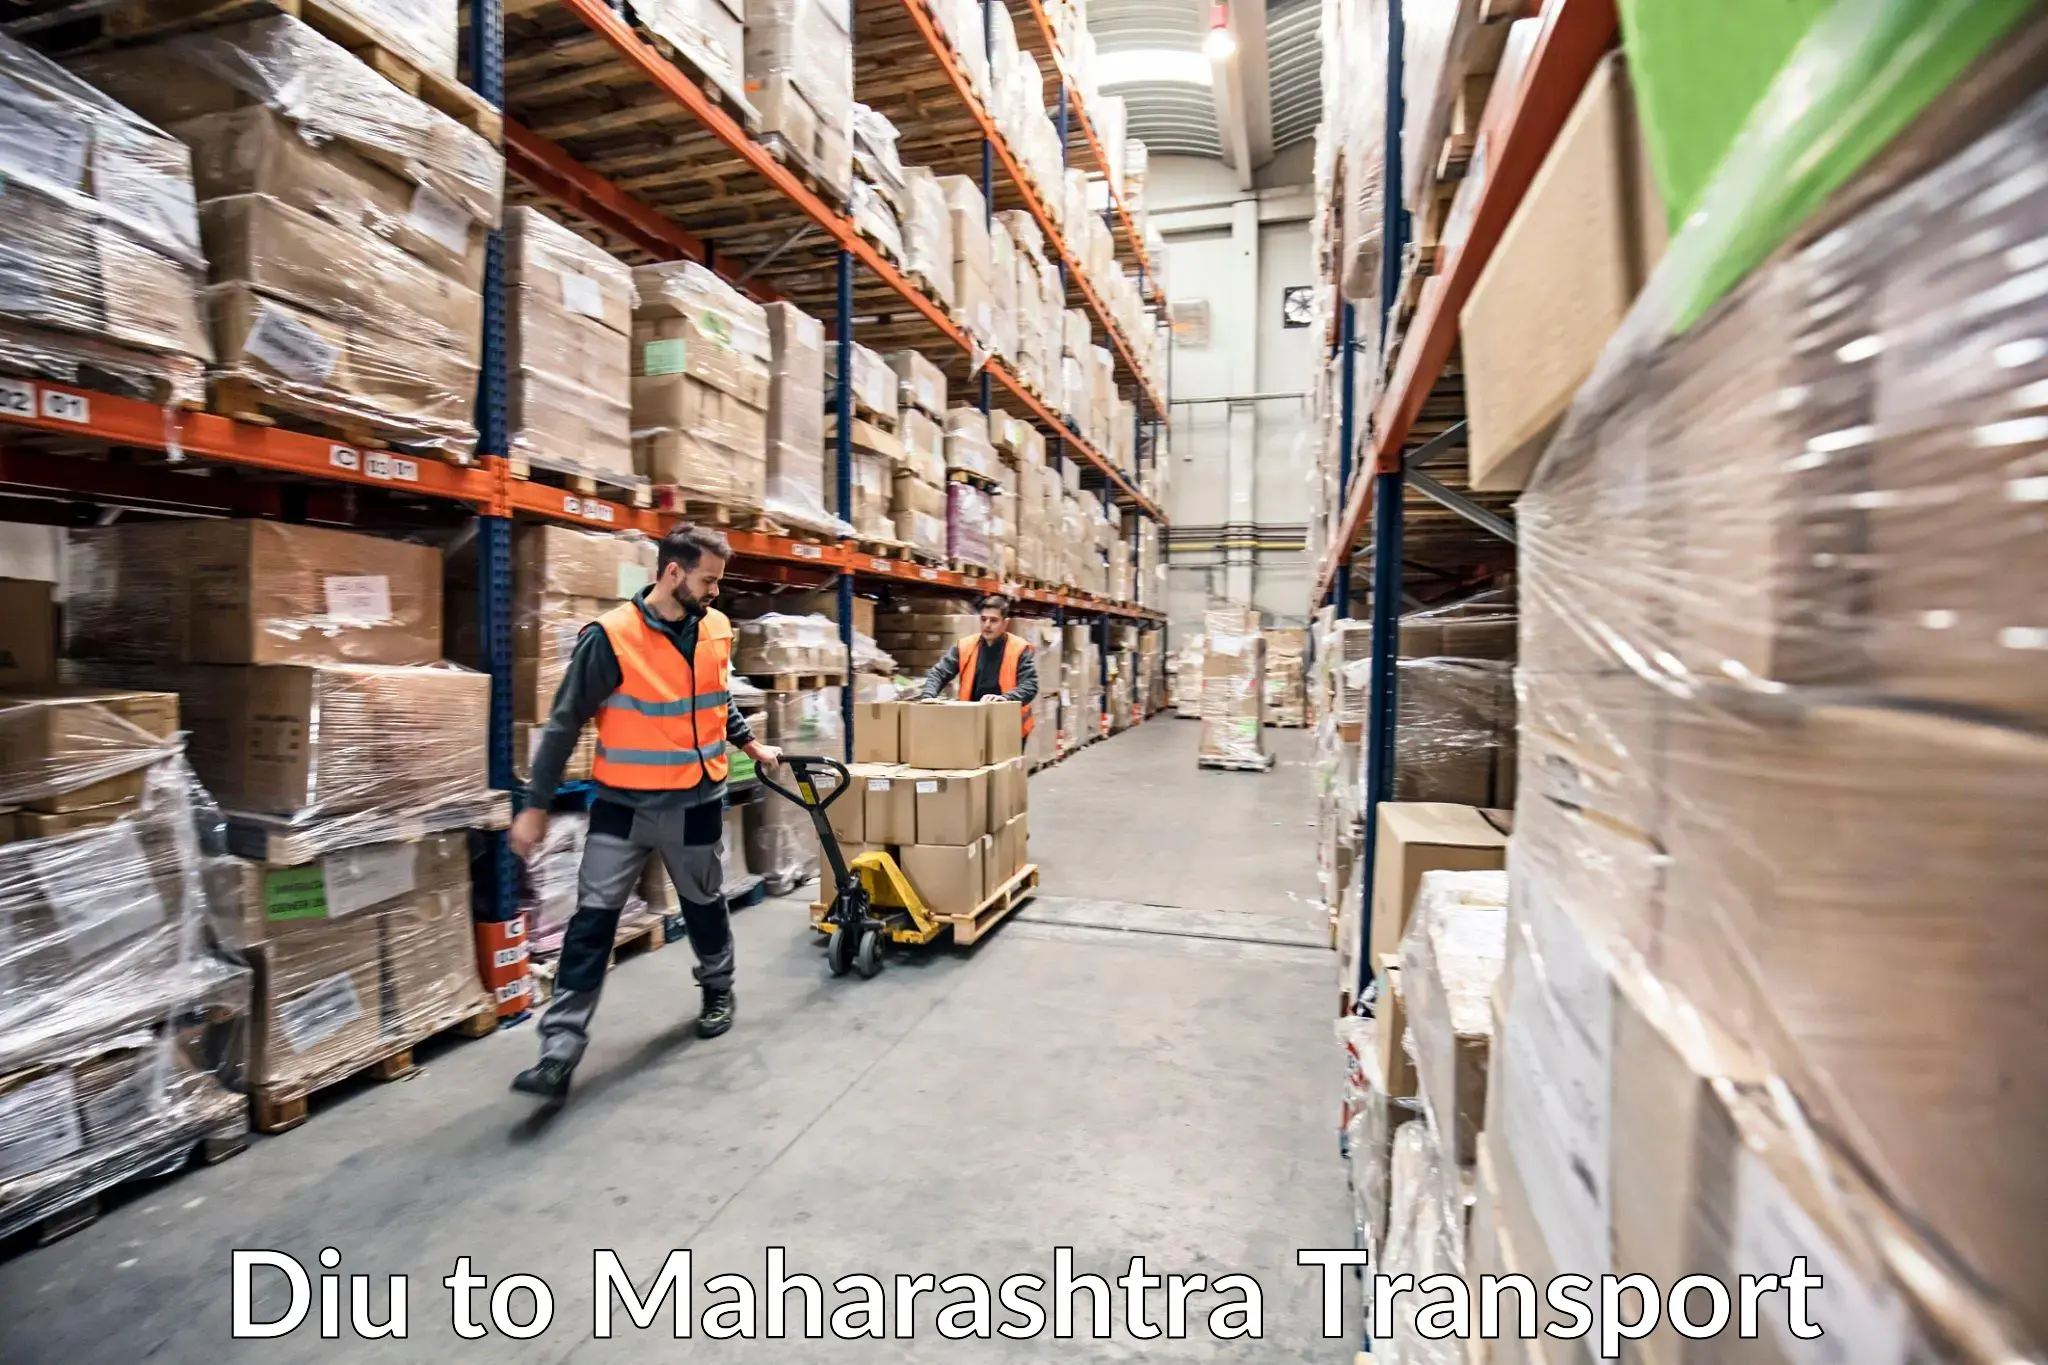 Truck transport companies in India Diu to Pusad